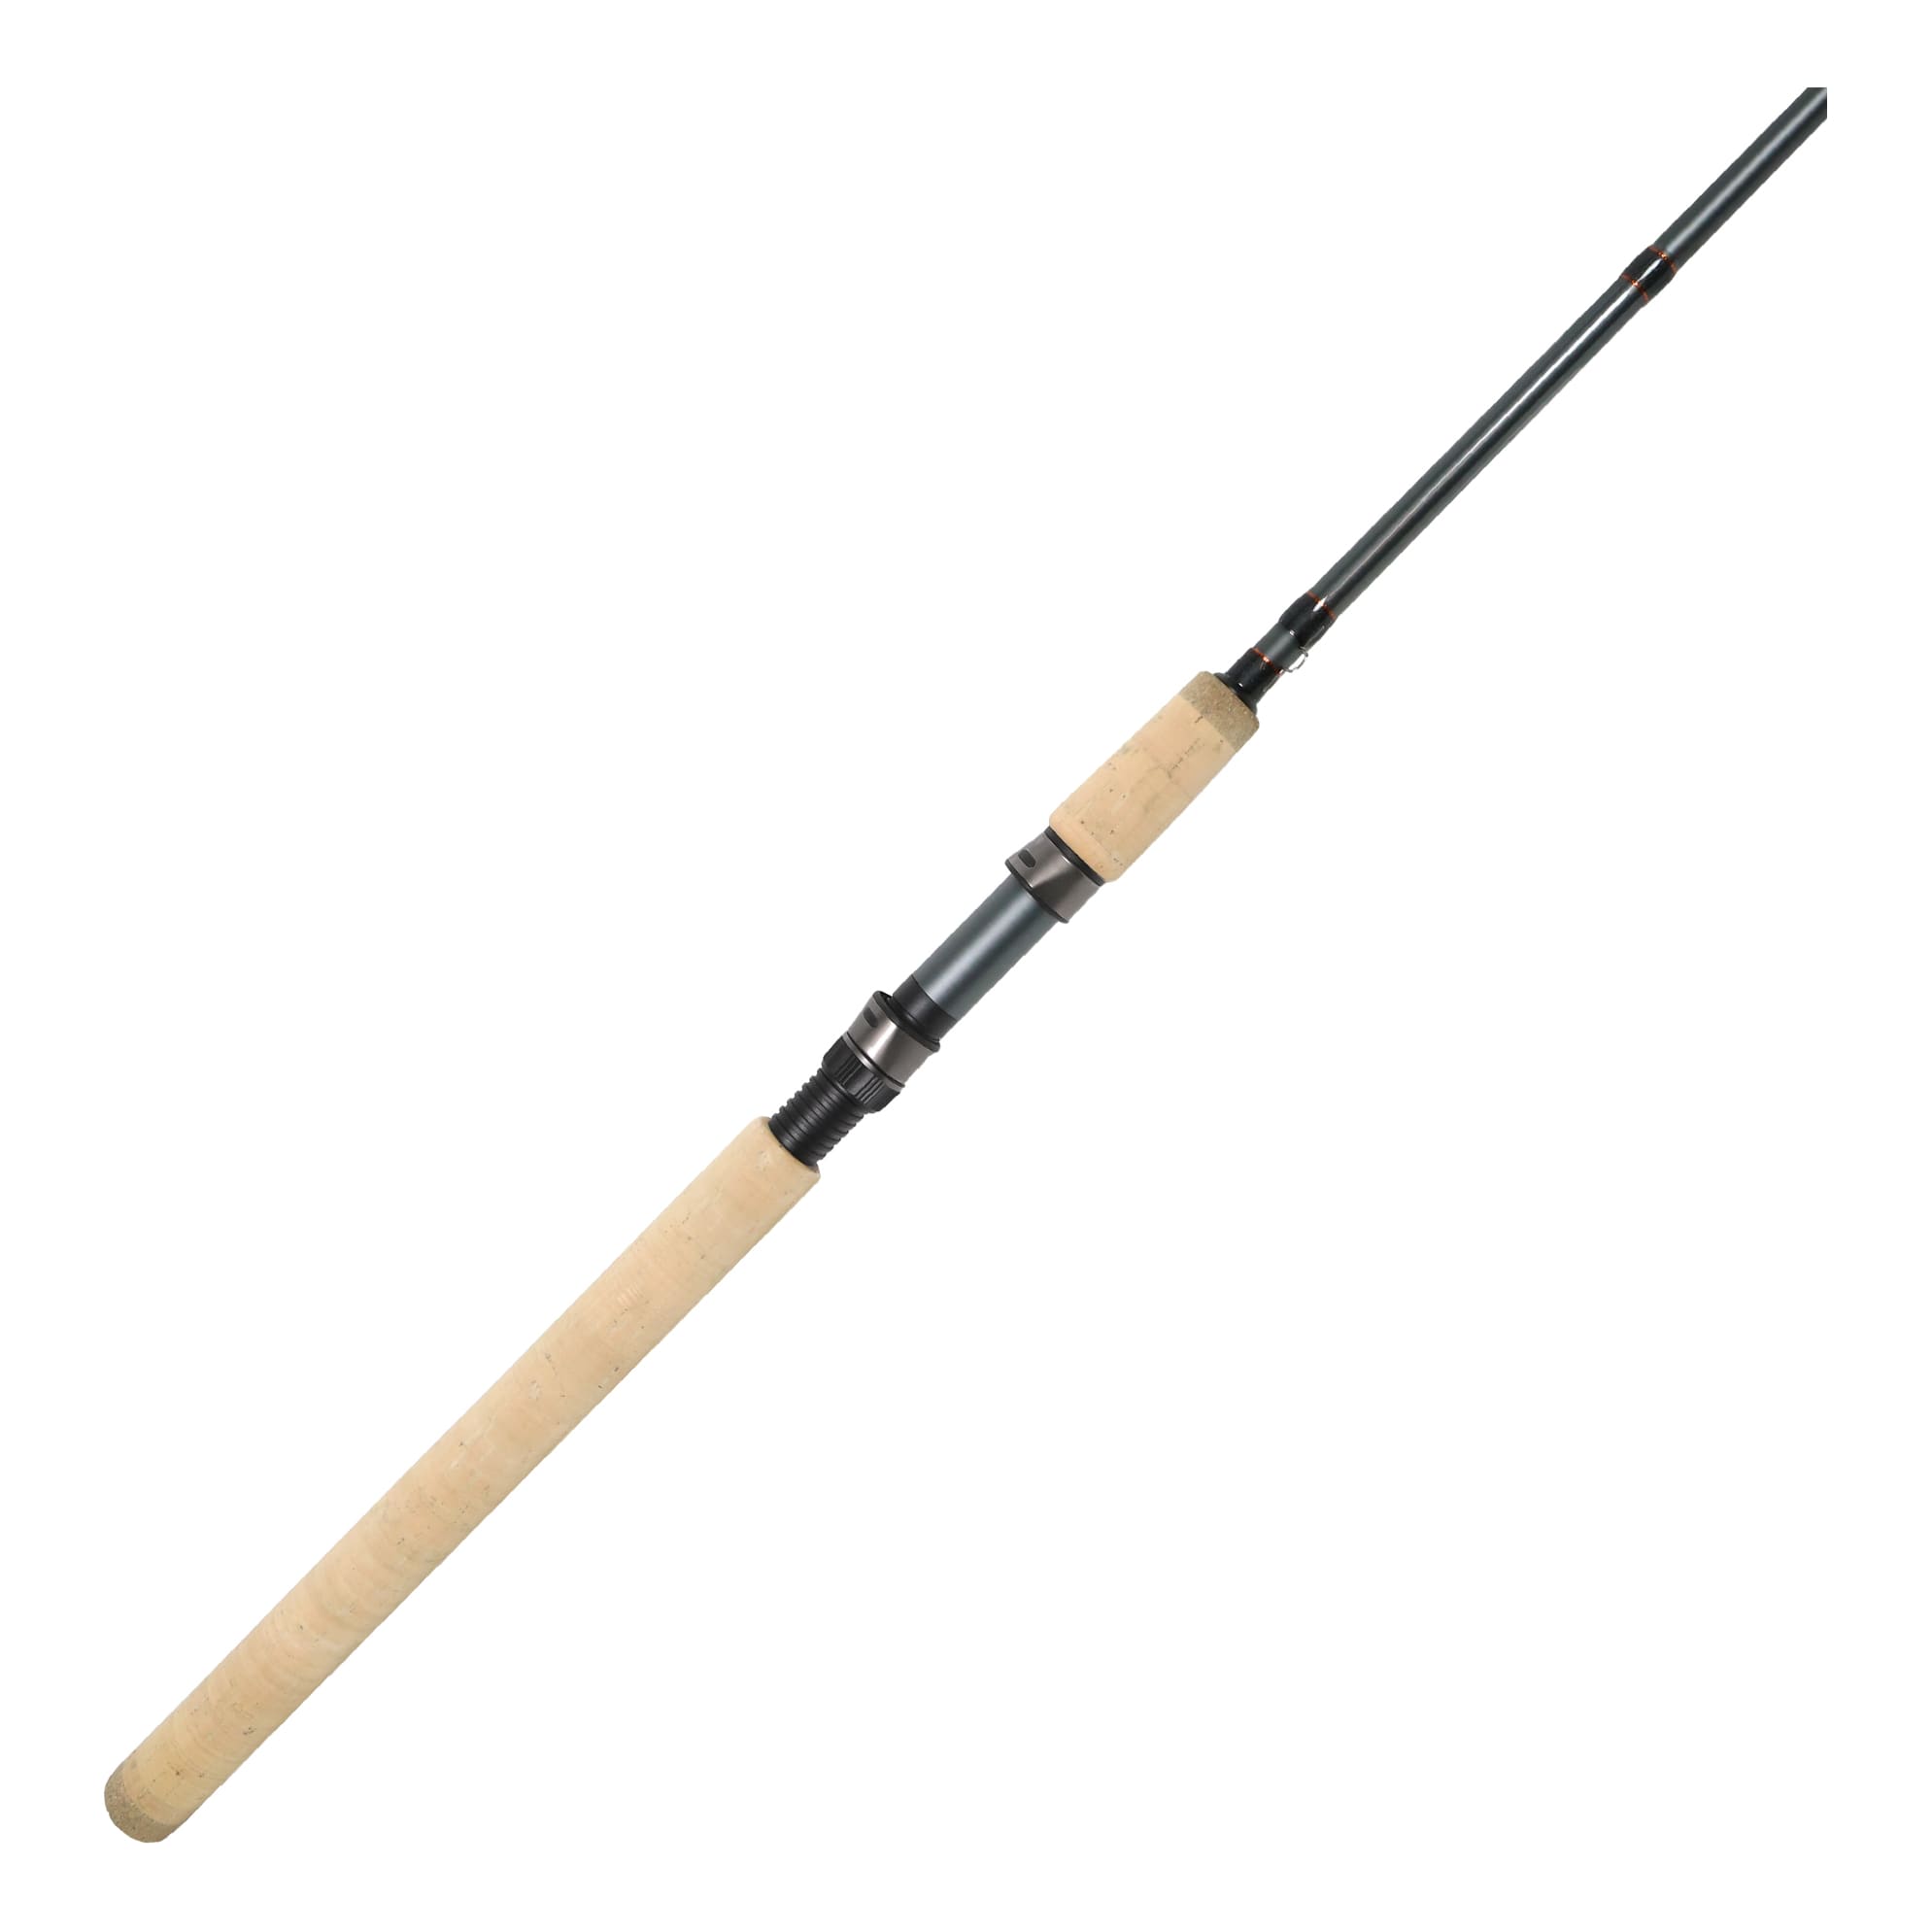 Okuma SST Salmon & Steelhead Rods